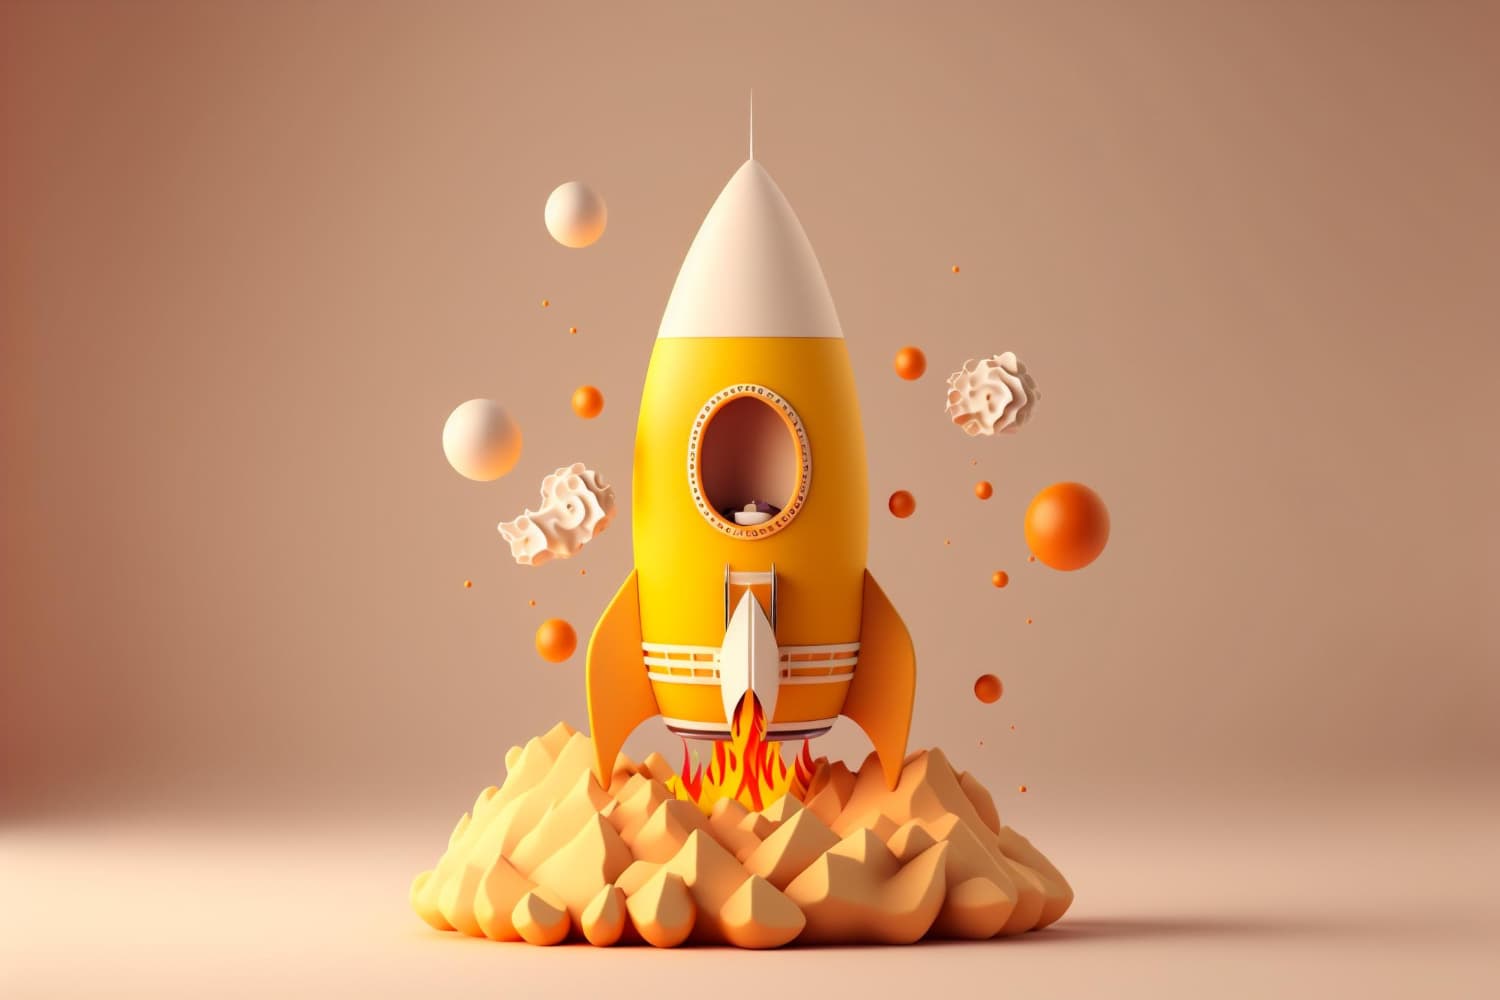 startup rocket symbol